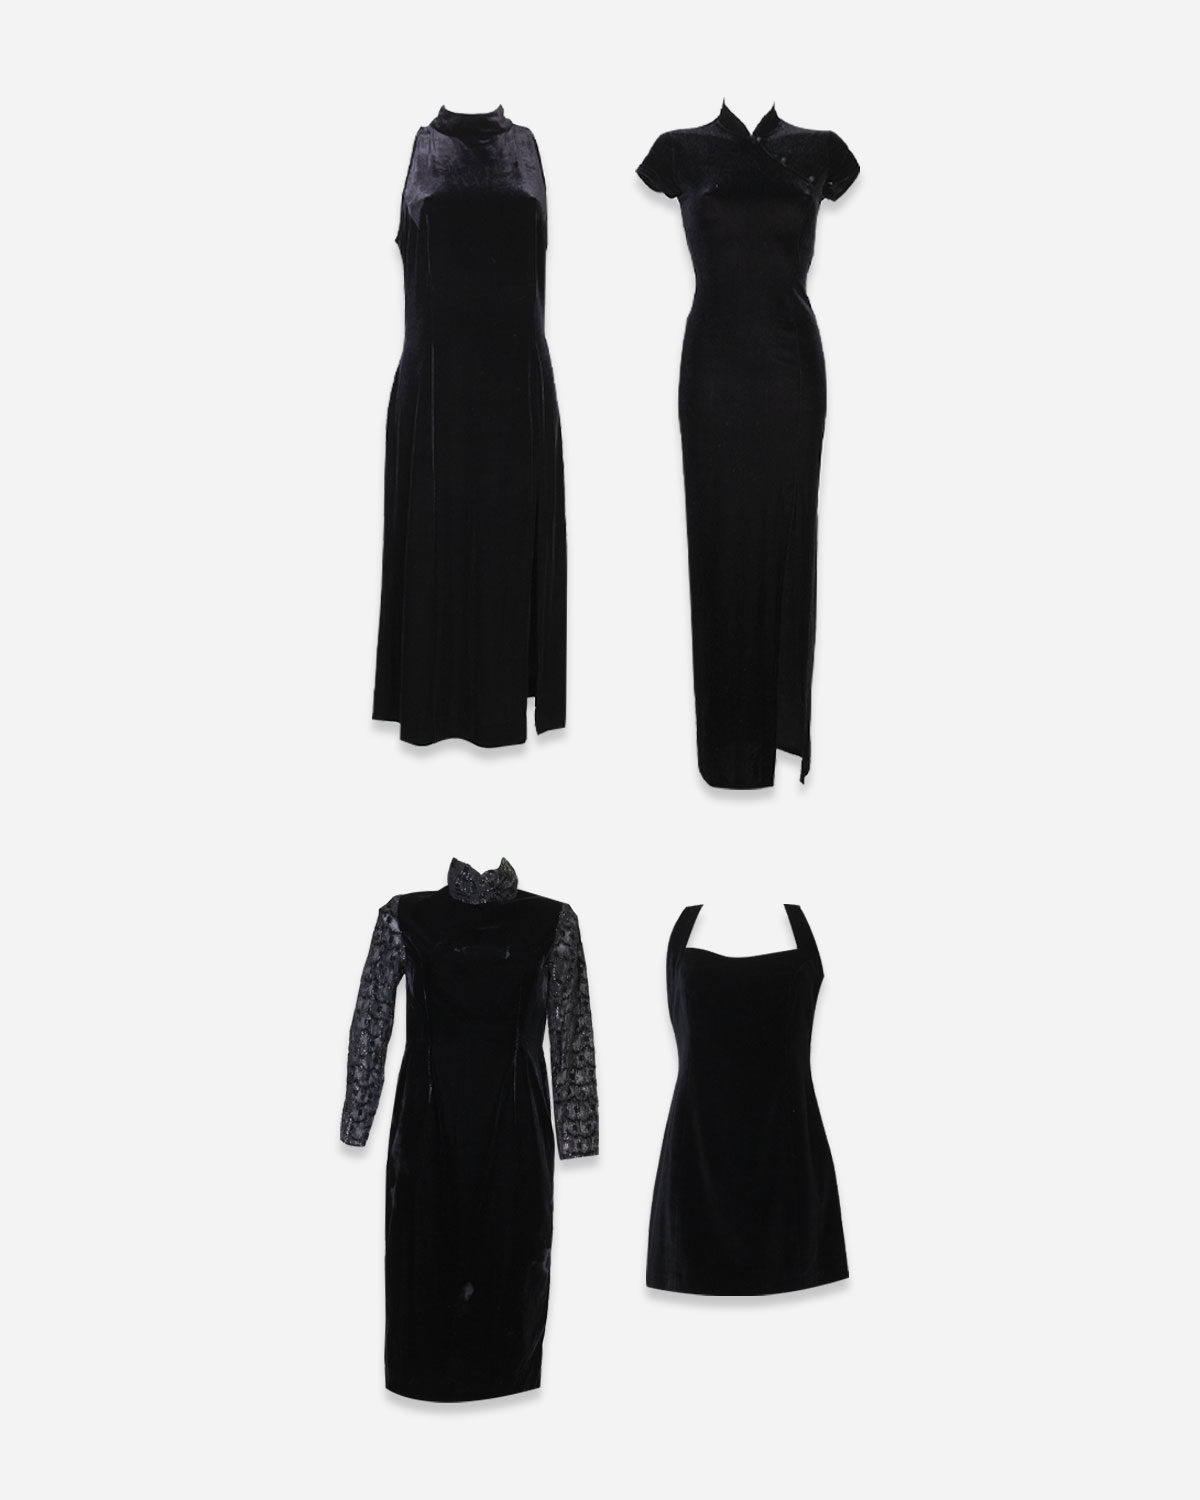 Women's 80s-90s velvet dresses: 4 pieces